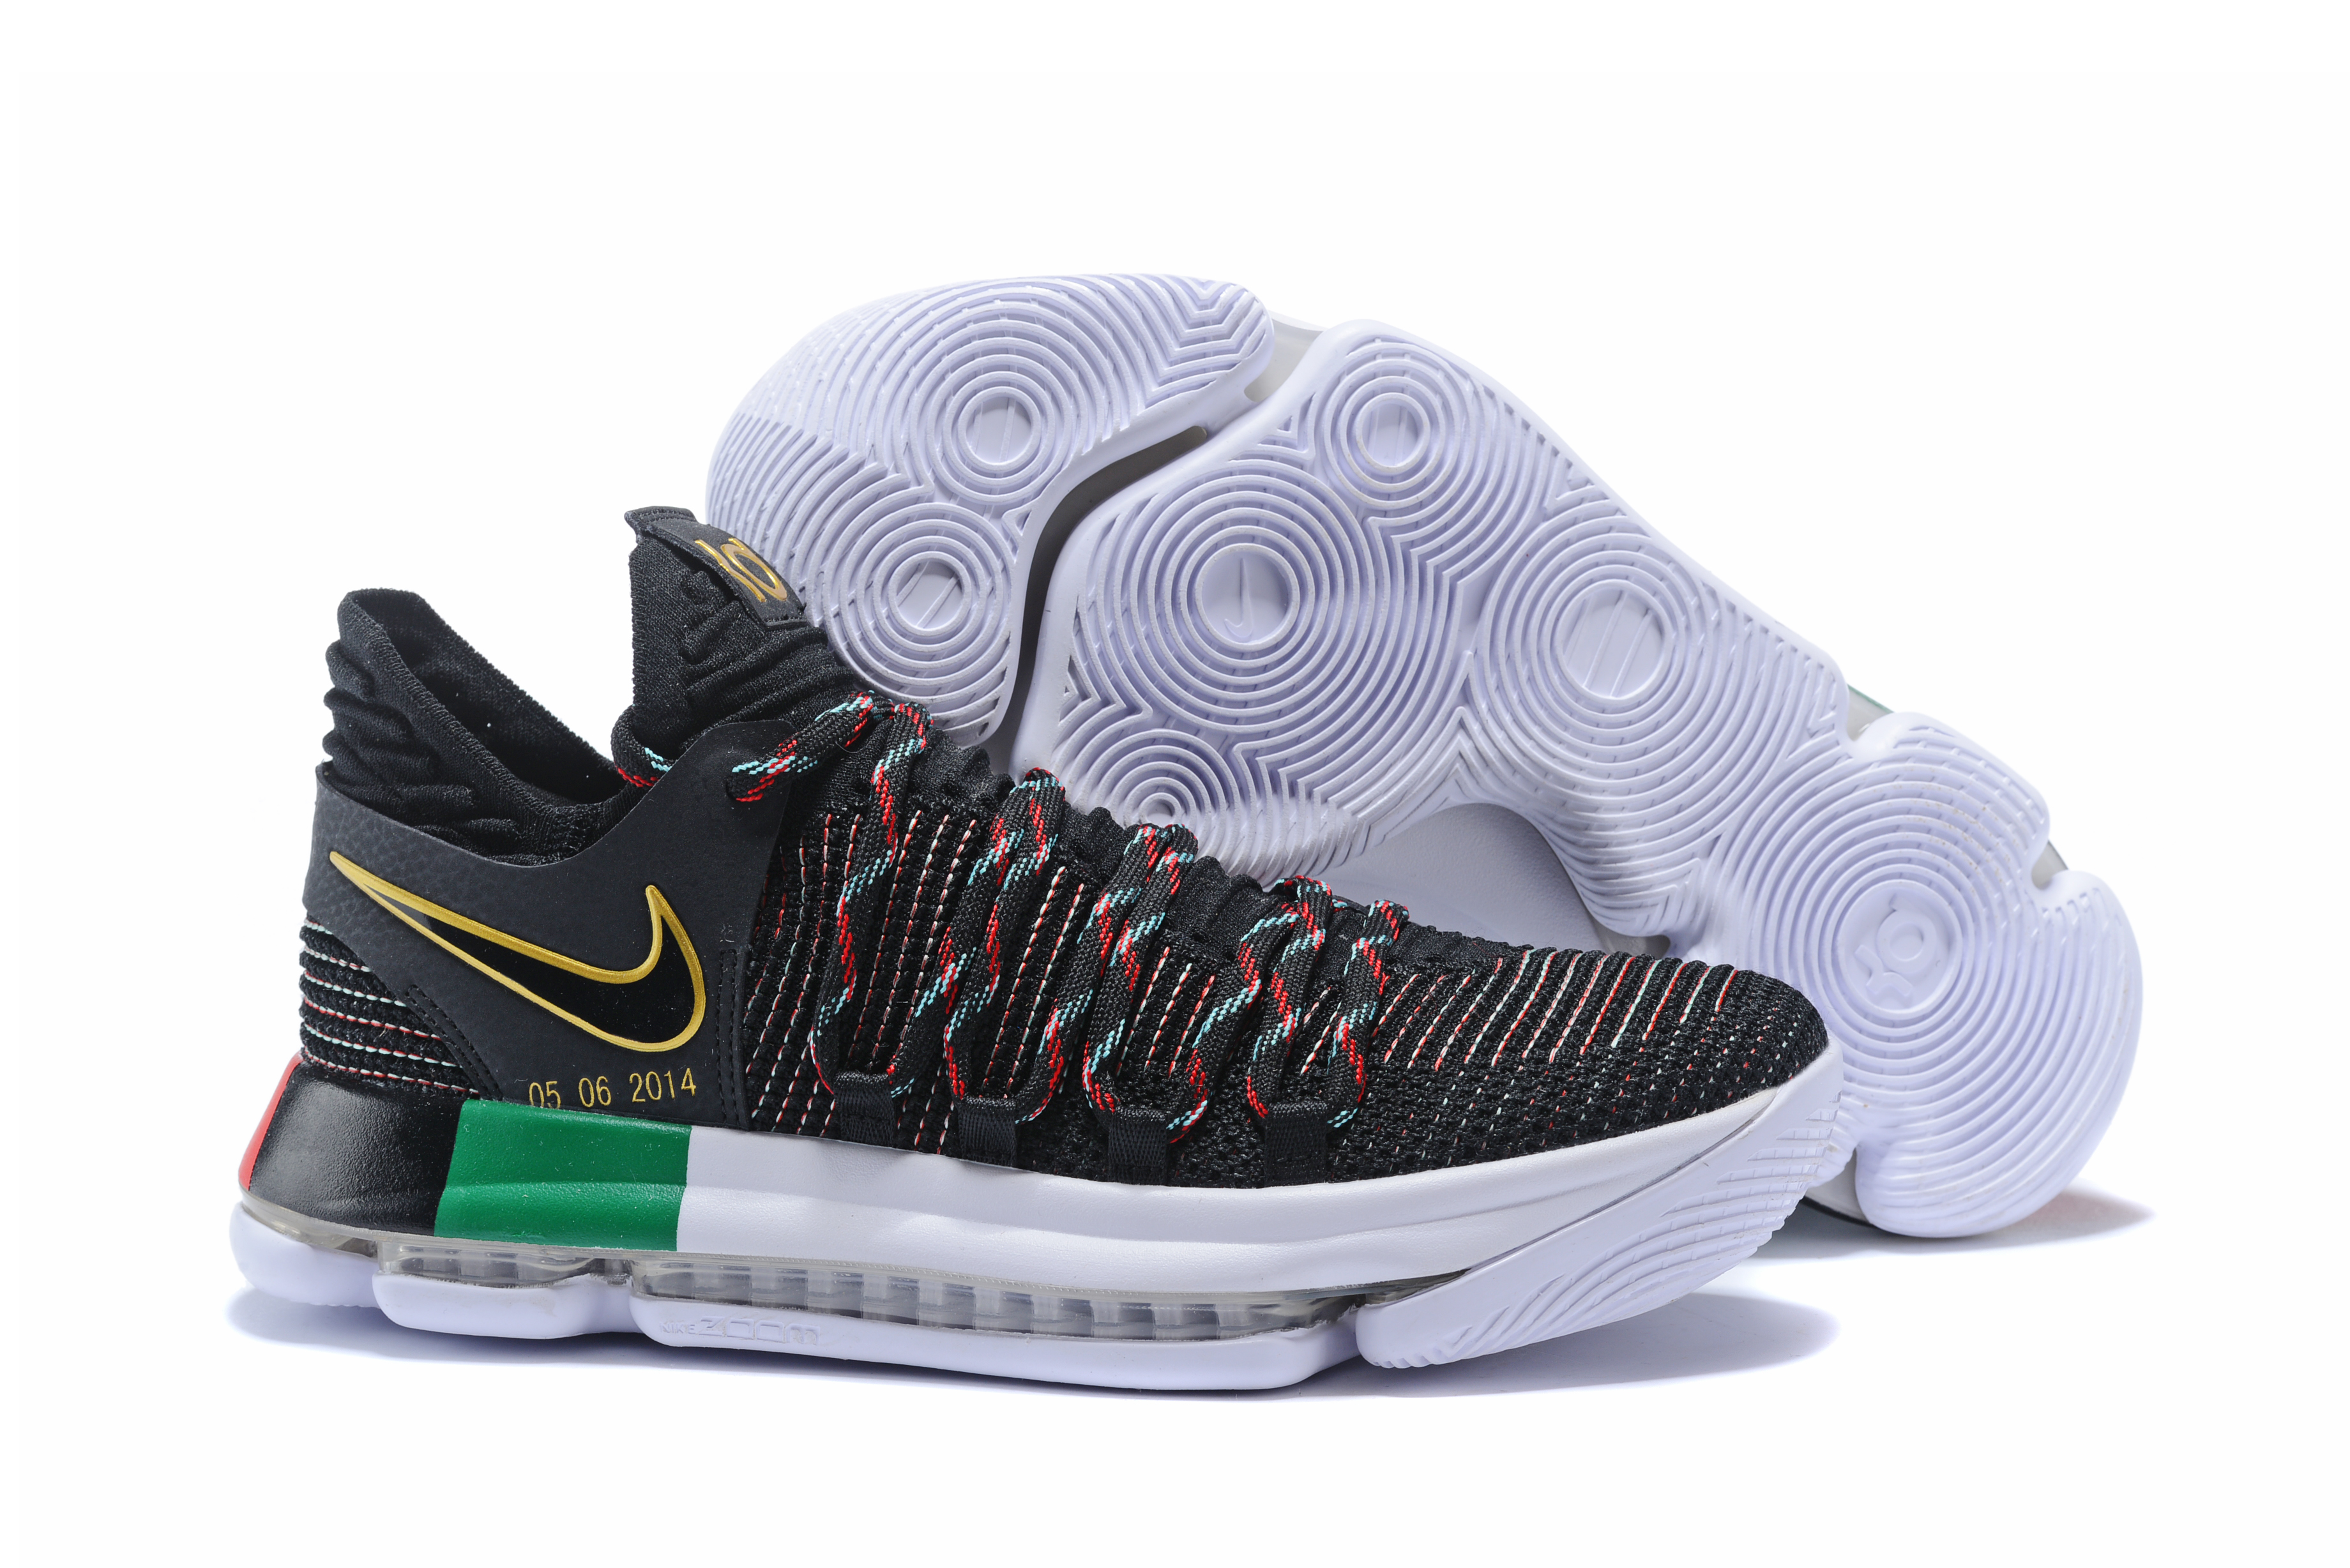 Nike KD 10 "BHM" Black/MultiColor Men's Basketball Shoes